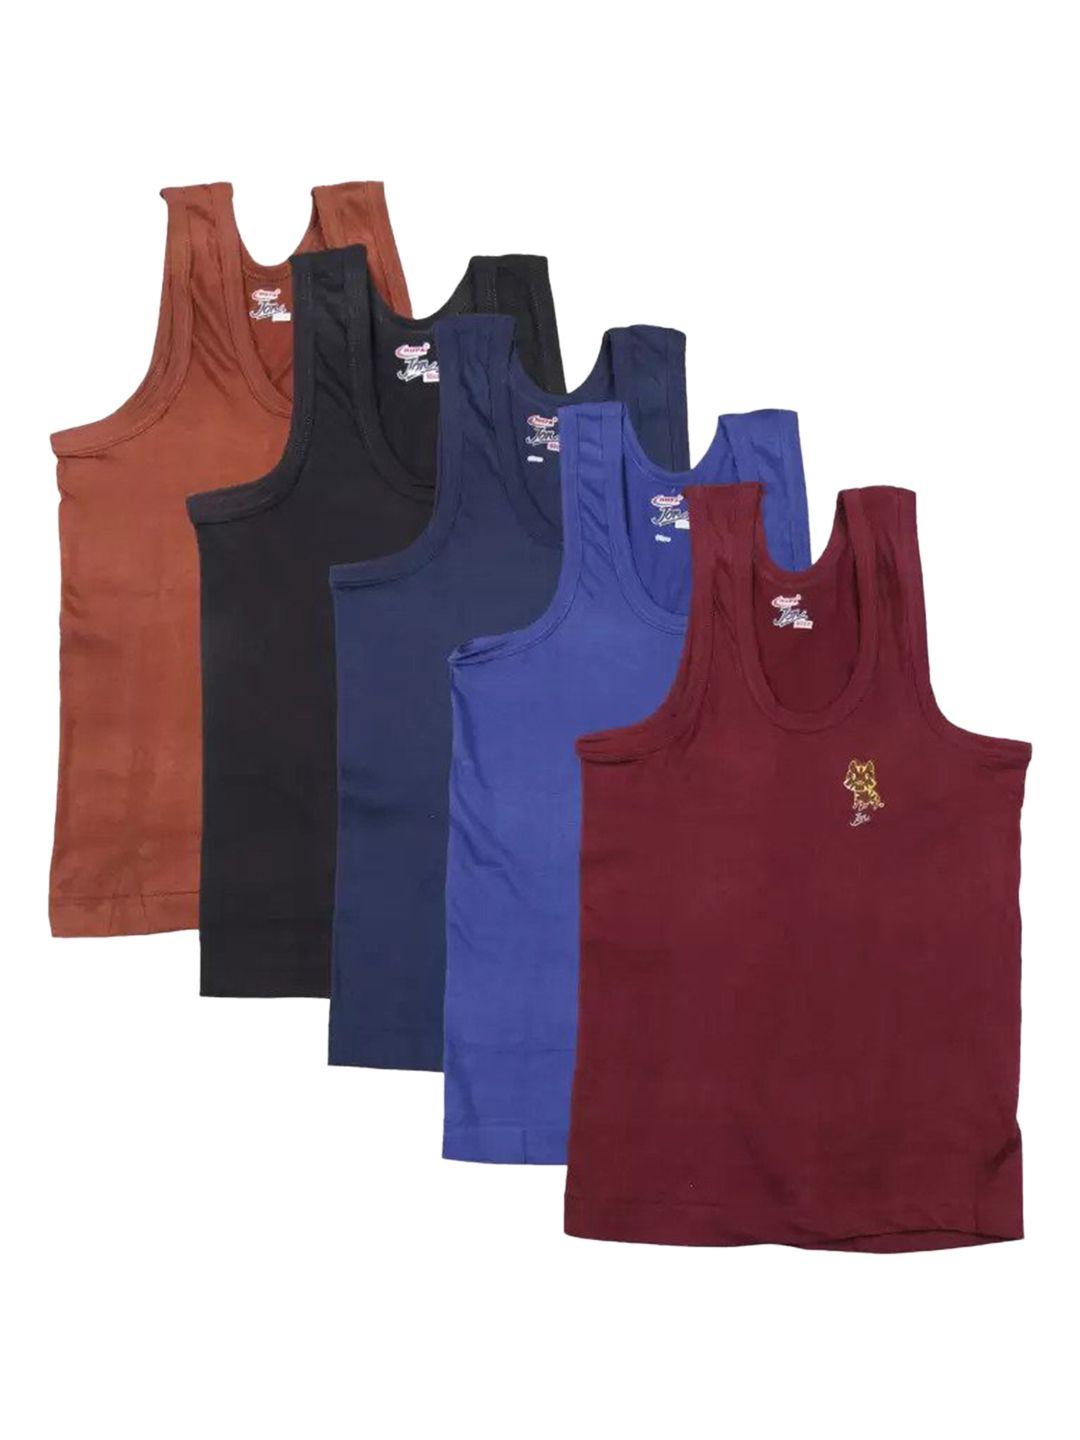 jon boys pack of 5 assorted cotton innerwear vests